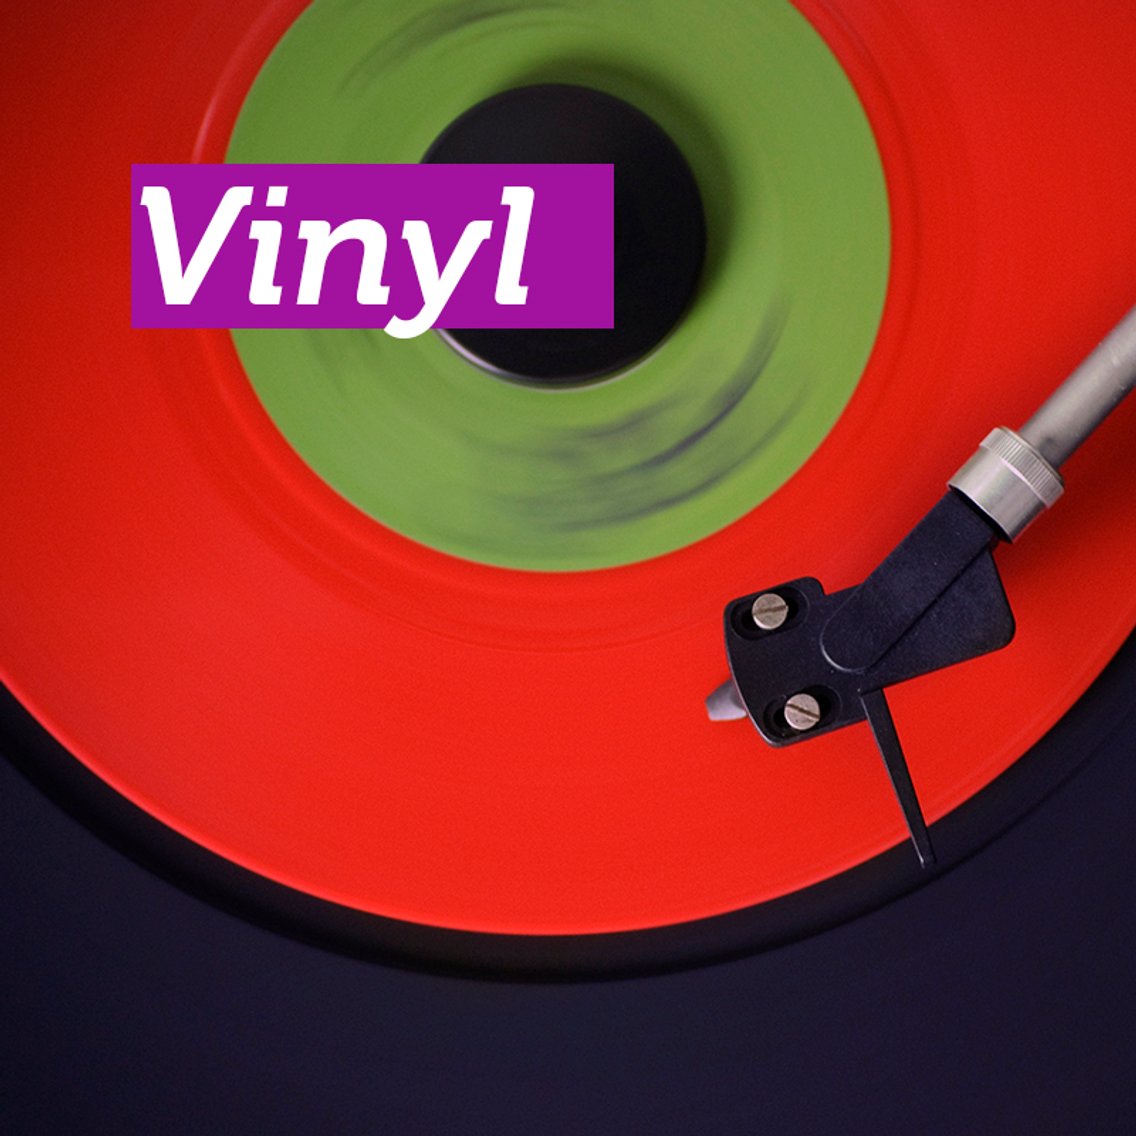 Vinyl - Cover Image